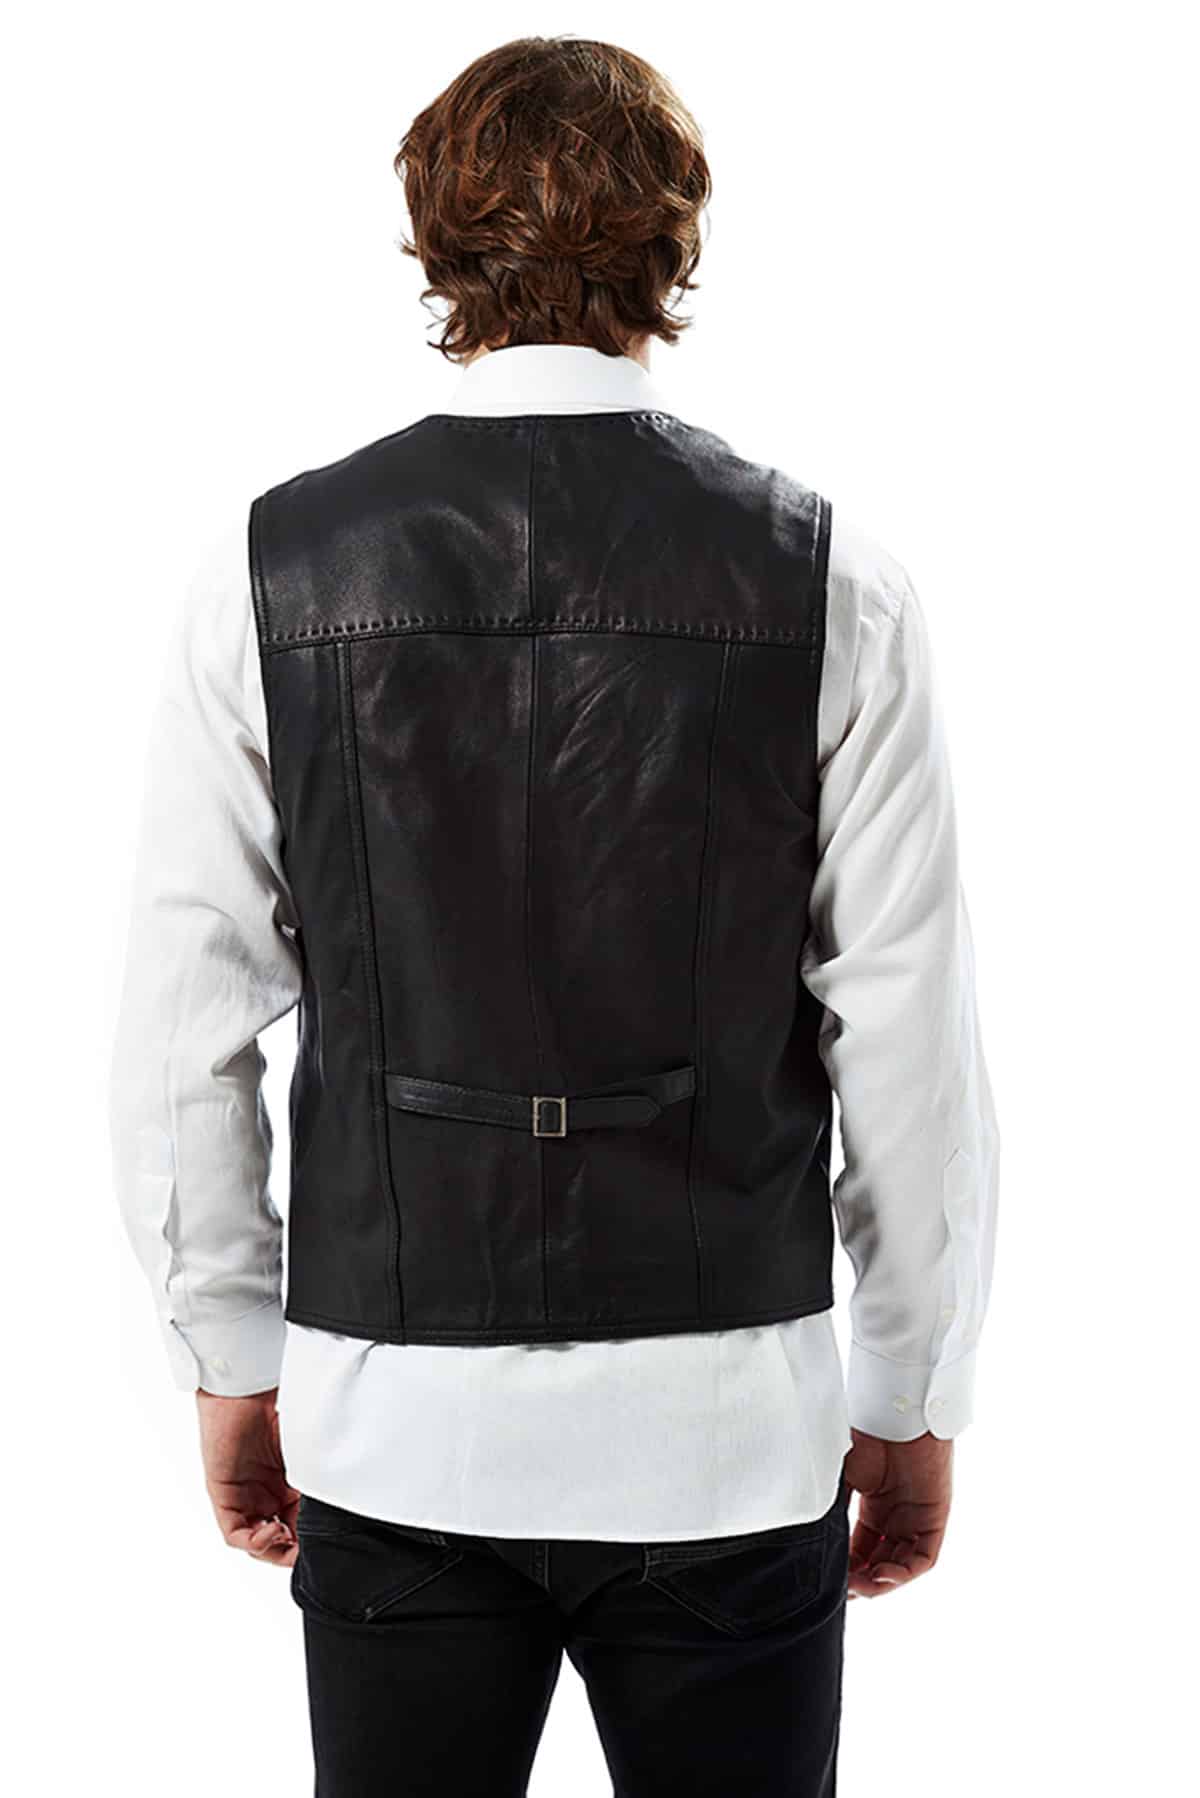 Pinto Classic Black Leather Vest – Urban Fashion Studio